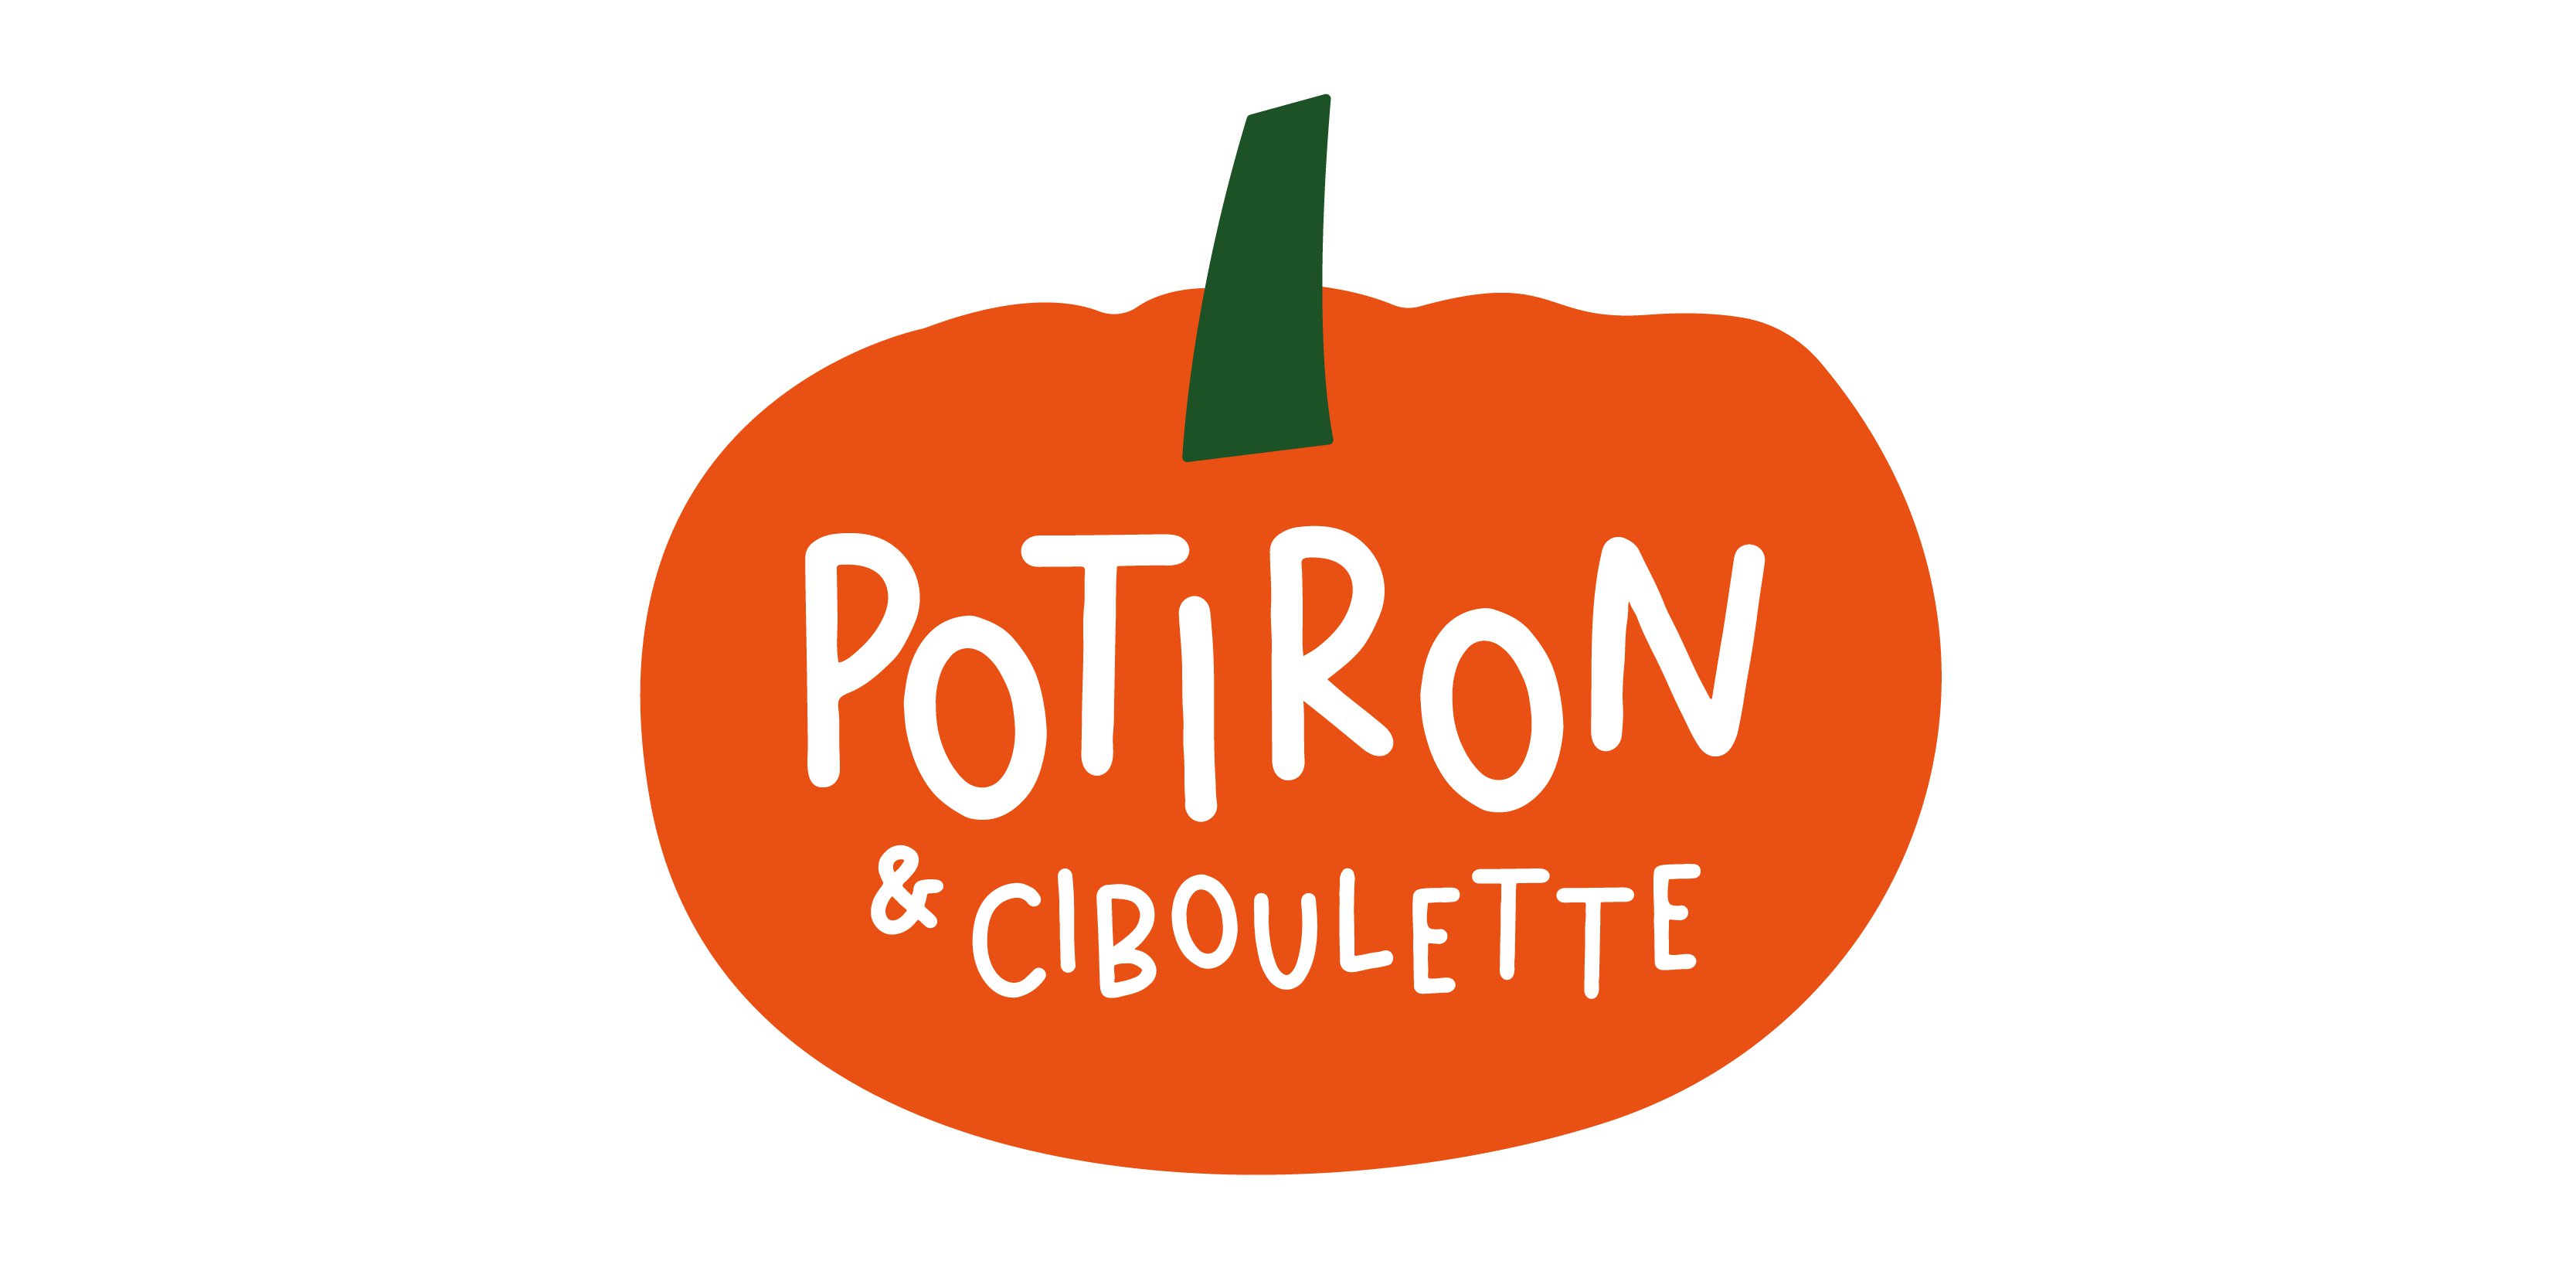 Potiron & Ciboulette